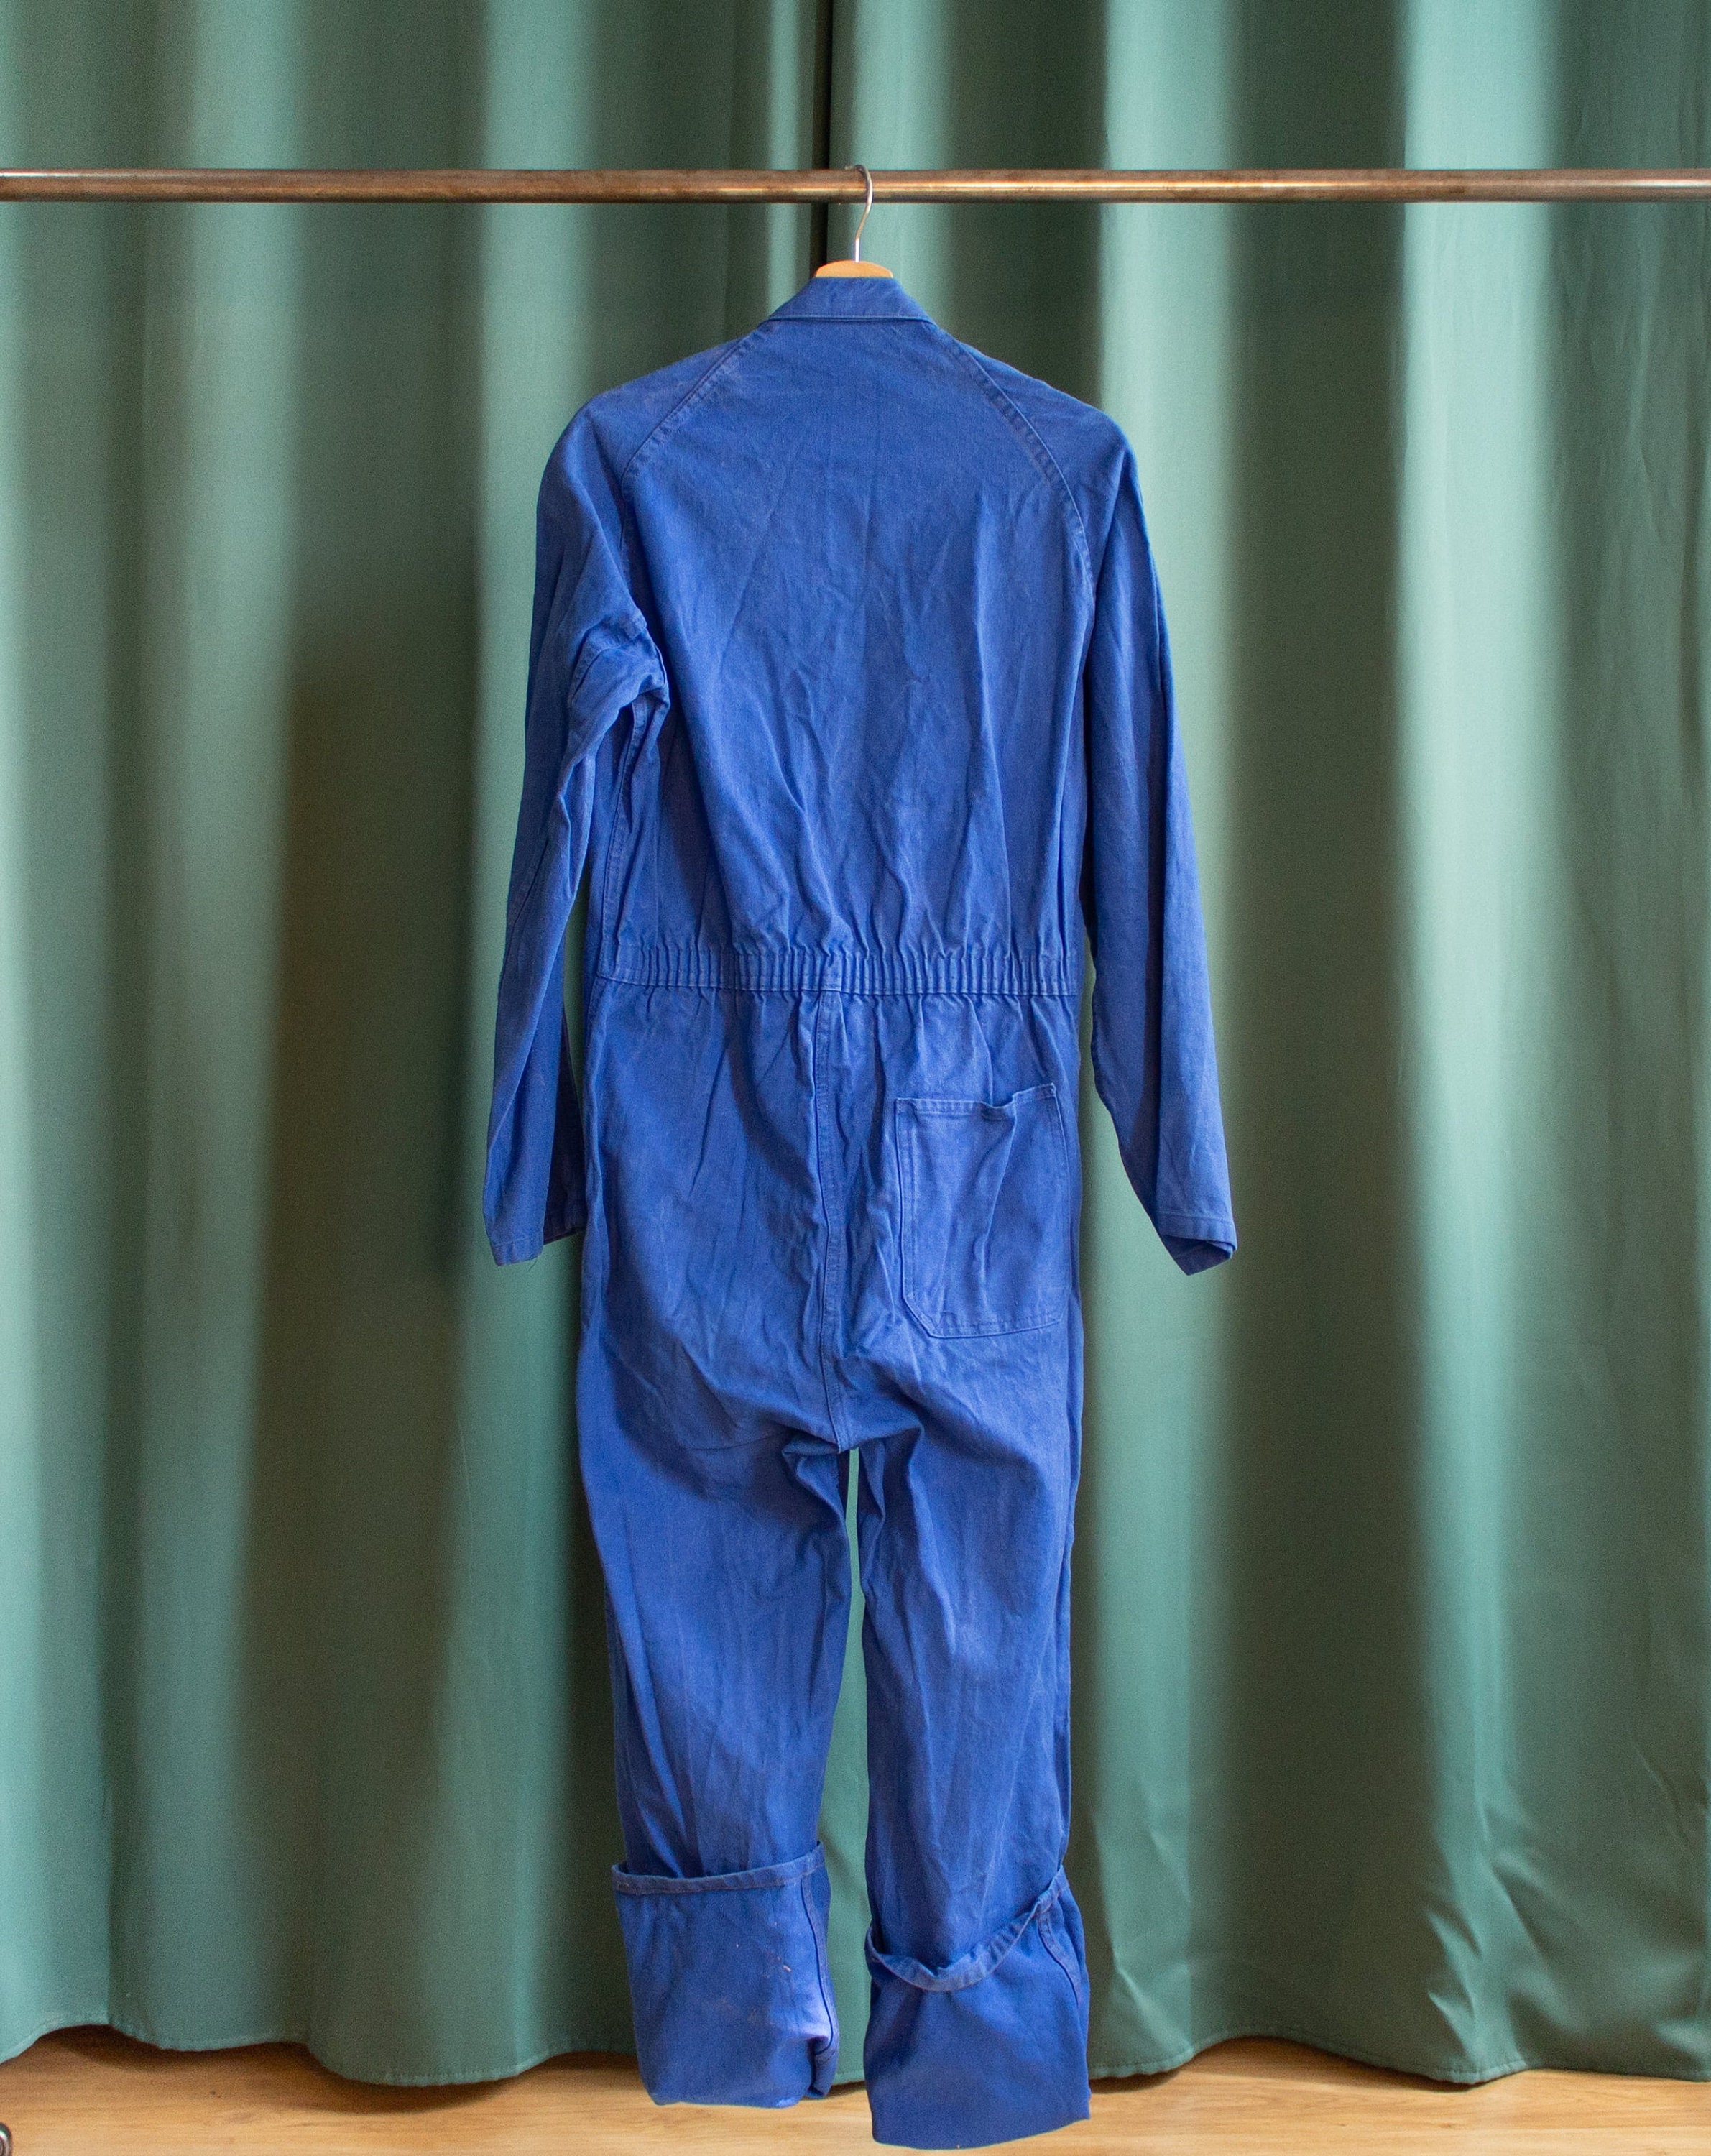 Vintage workwear Jump-suit / Vintage blue work coveralls | Etsy